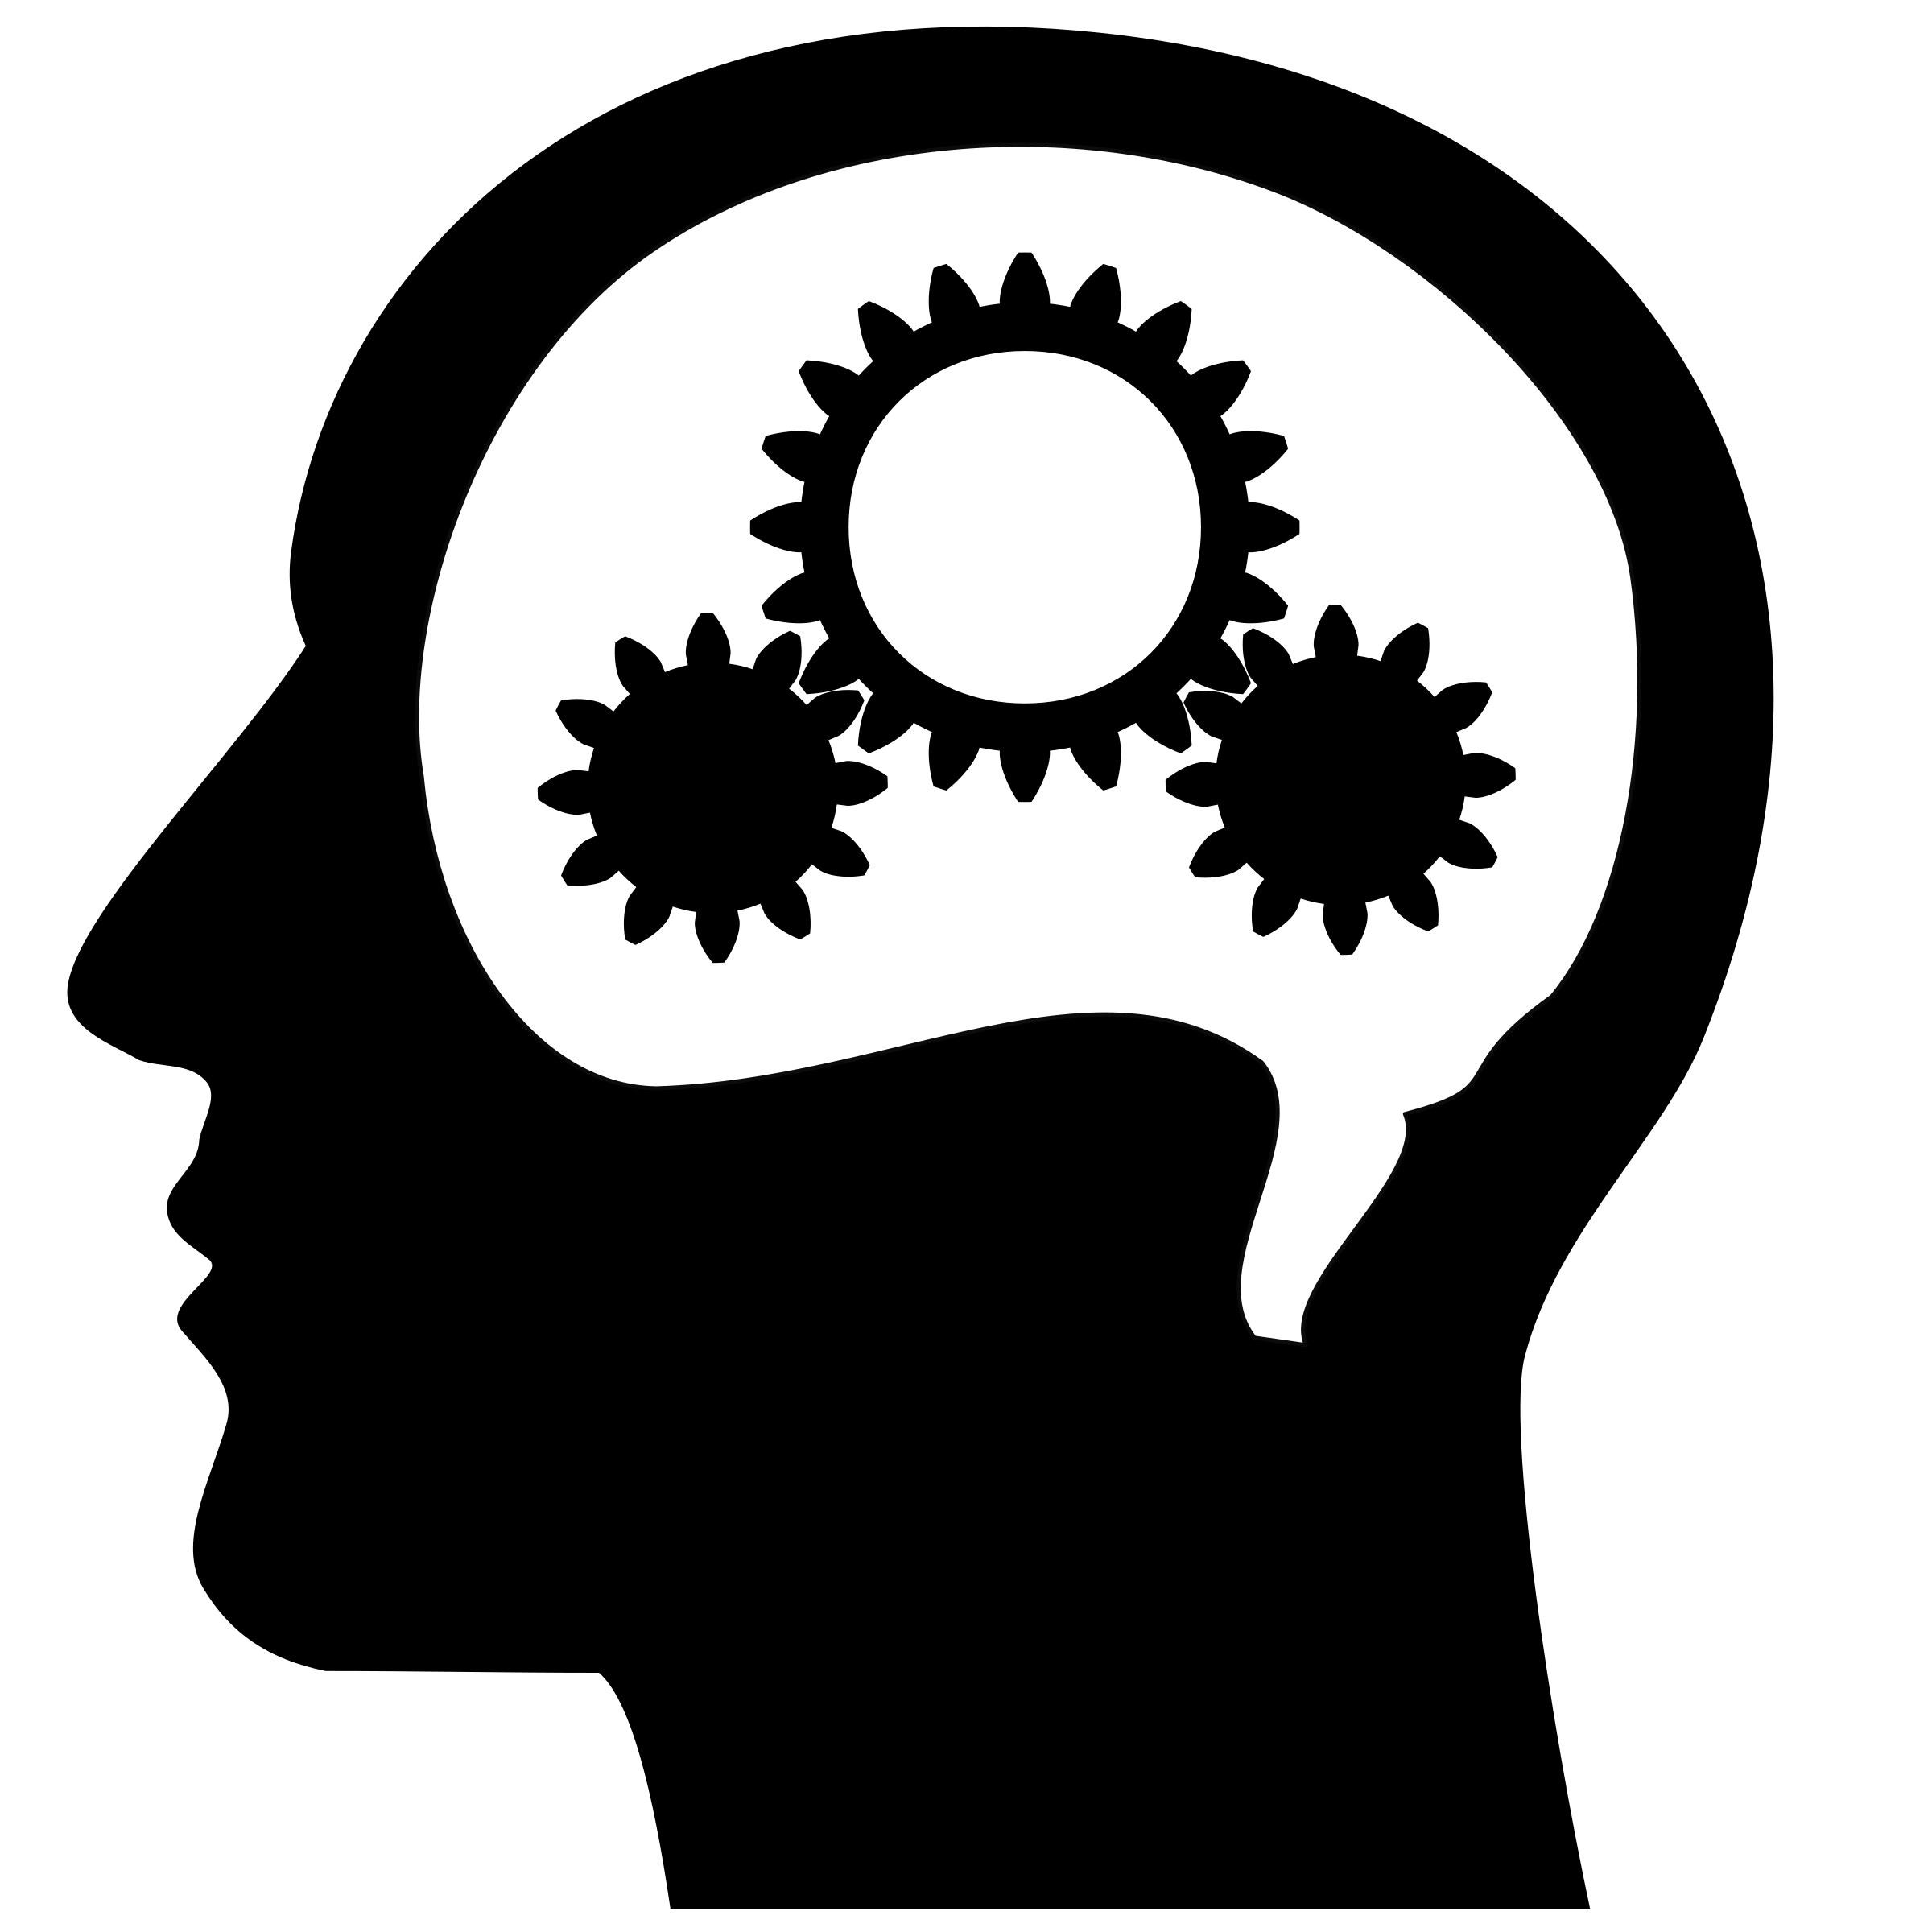 Thinking brain machine vector clipart image - Free stock ...